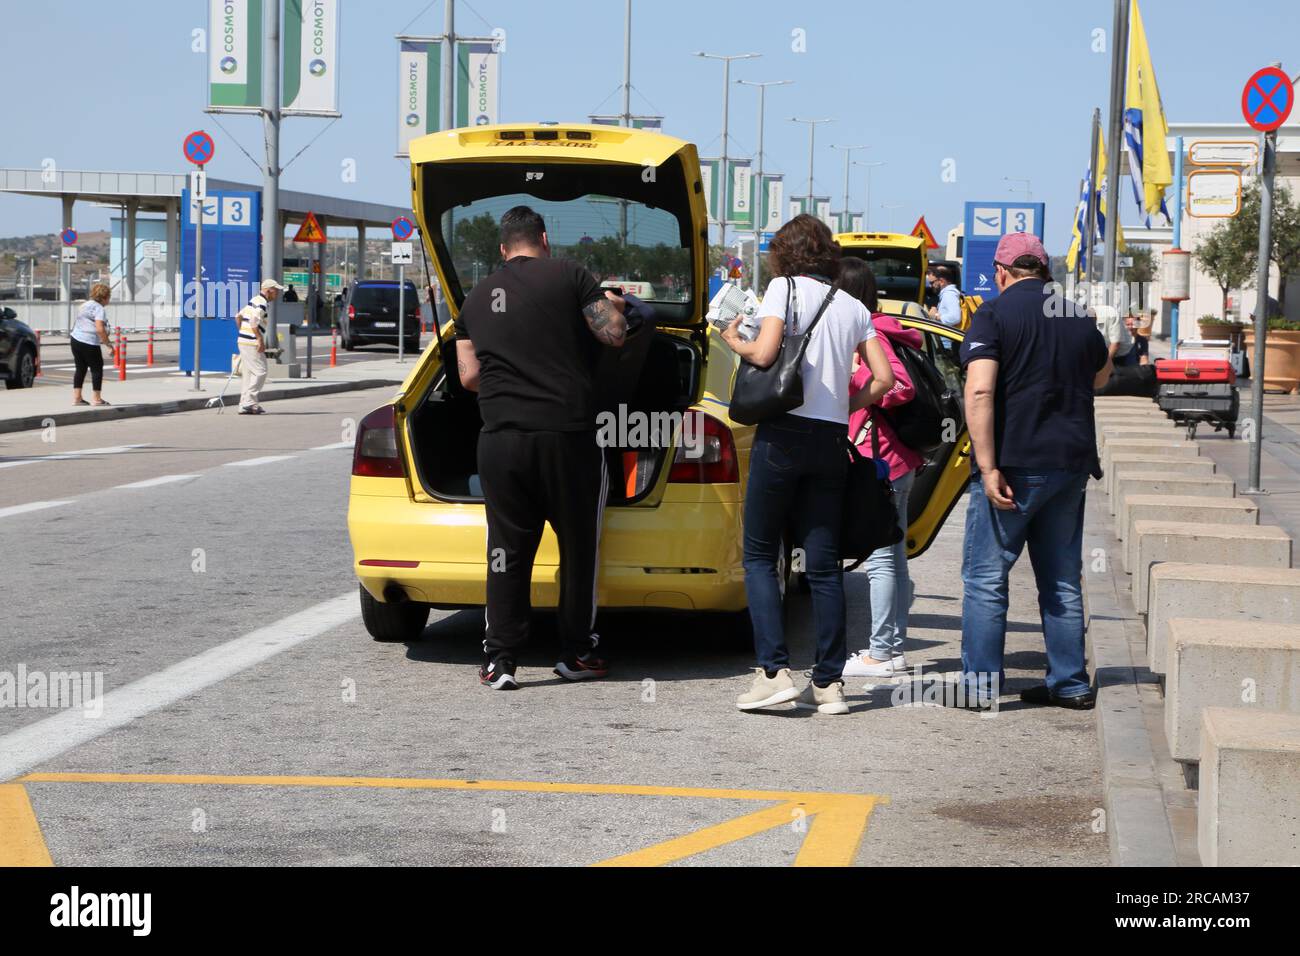 Athens Greece Athens International Airport (AIA) Eleftherios Venizelos Family Loading Luggage into Taxi Stock Photo